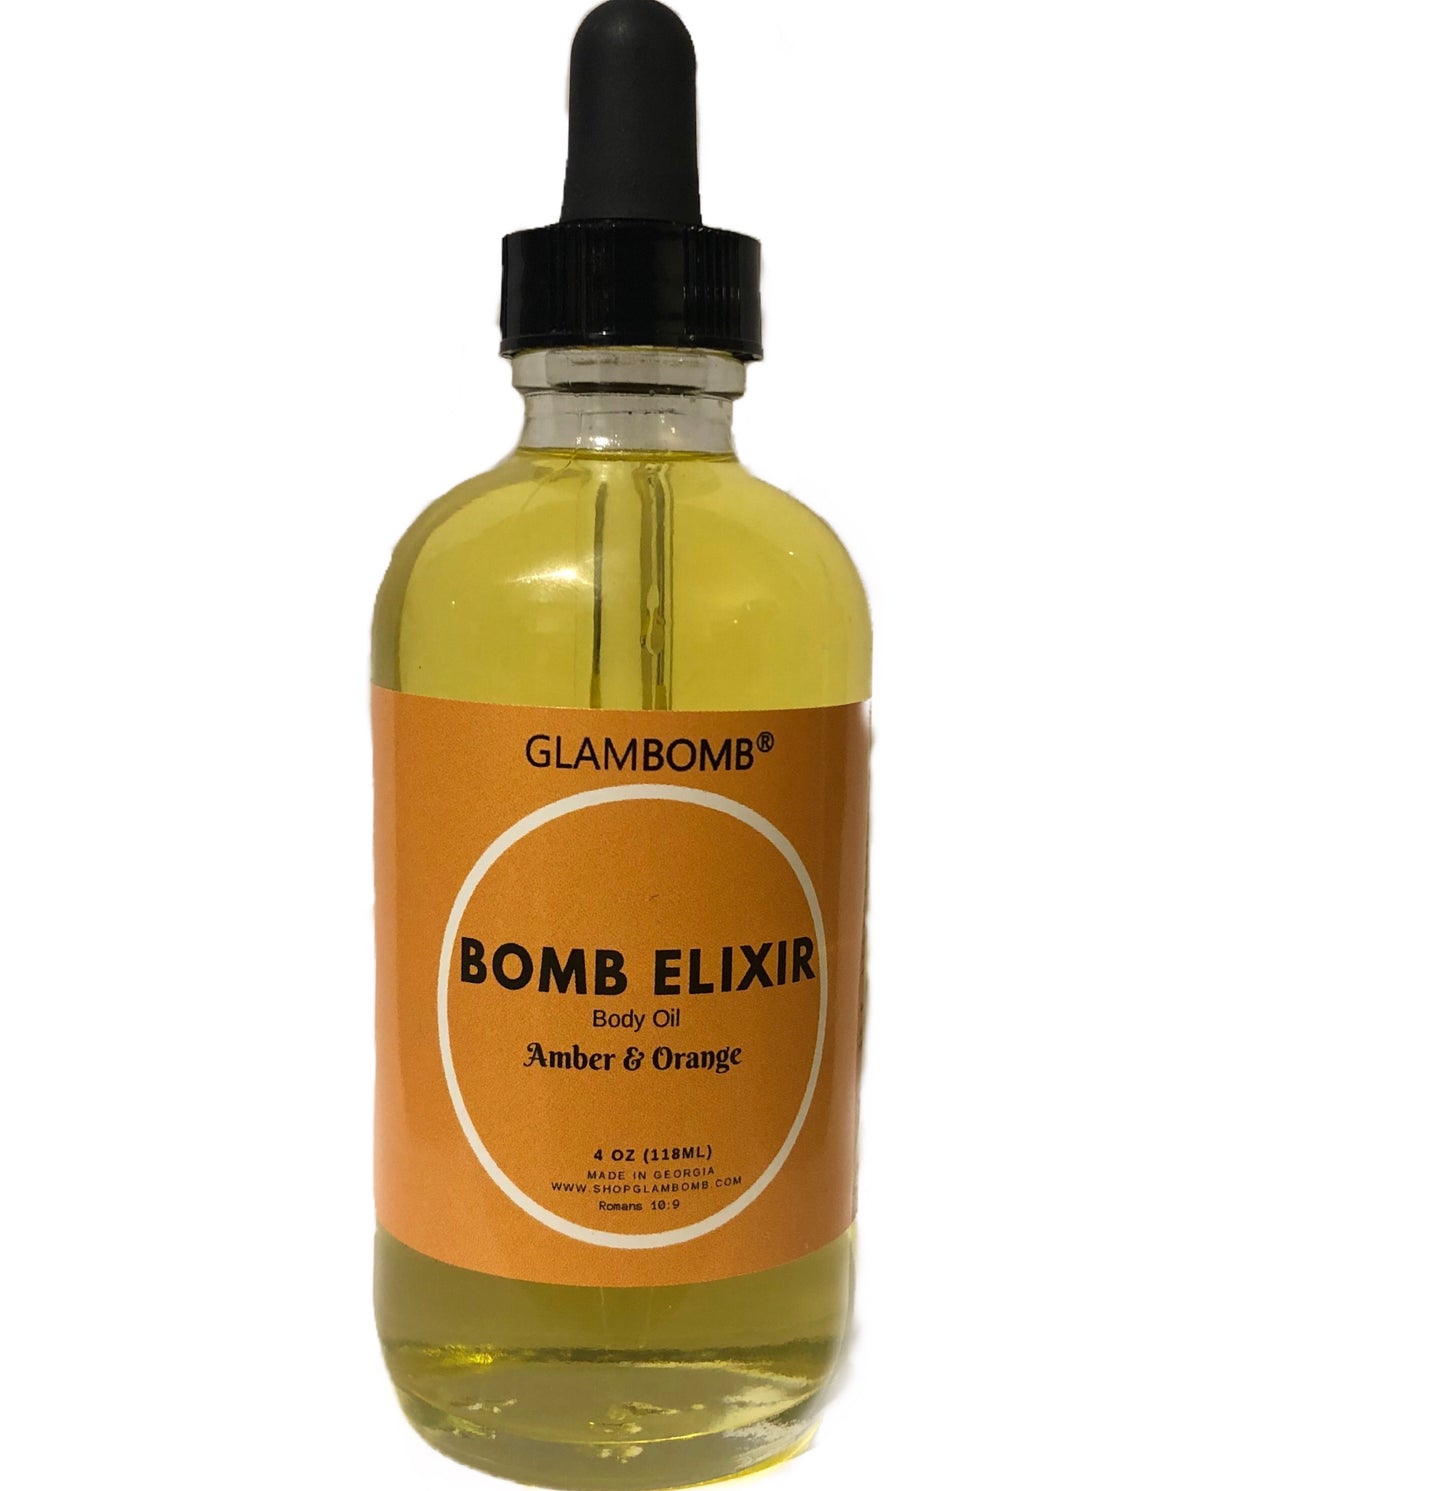 Bomb Elixir Body Oil - Amber & Orange